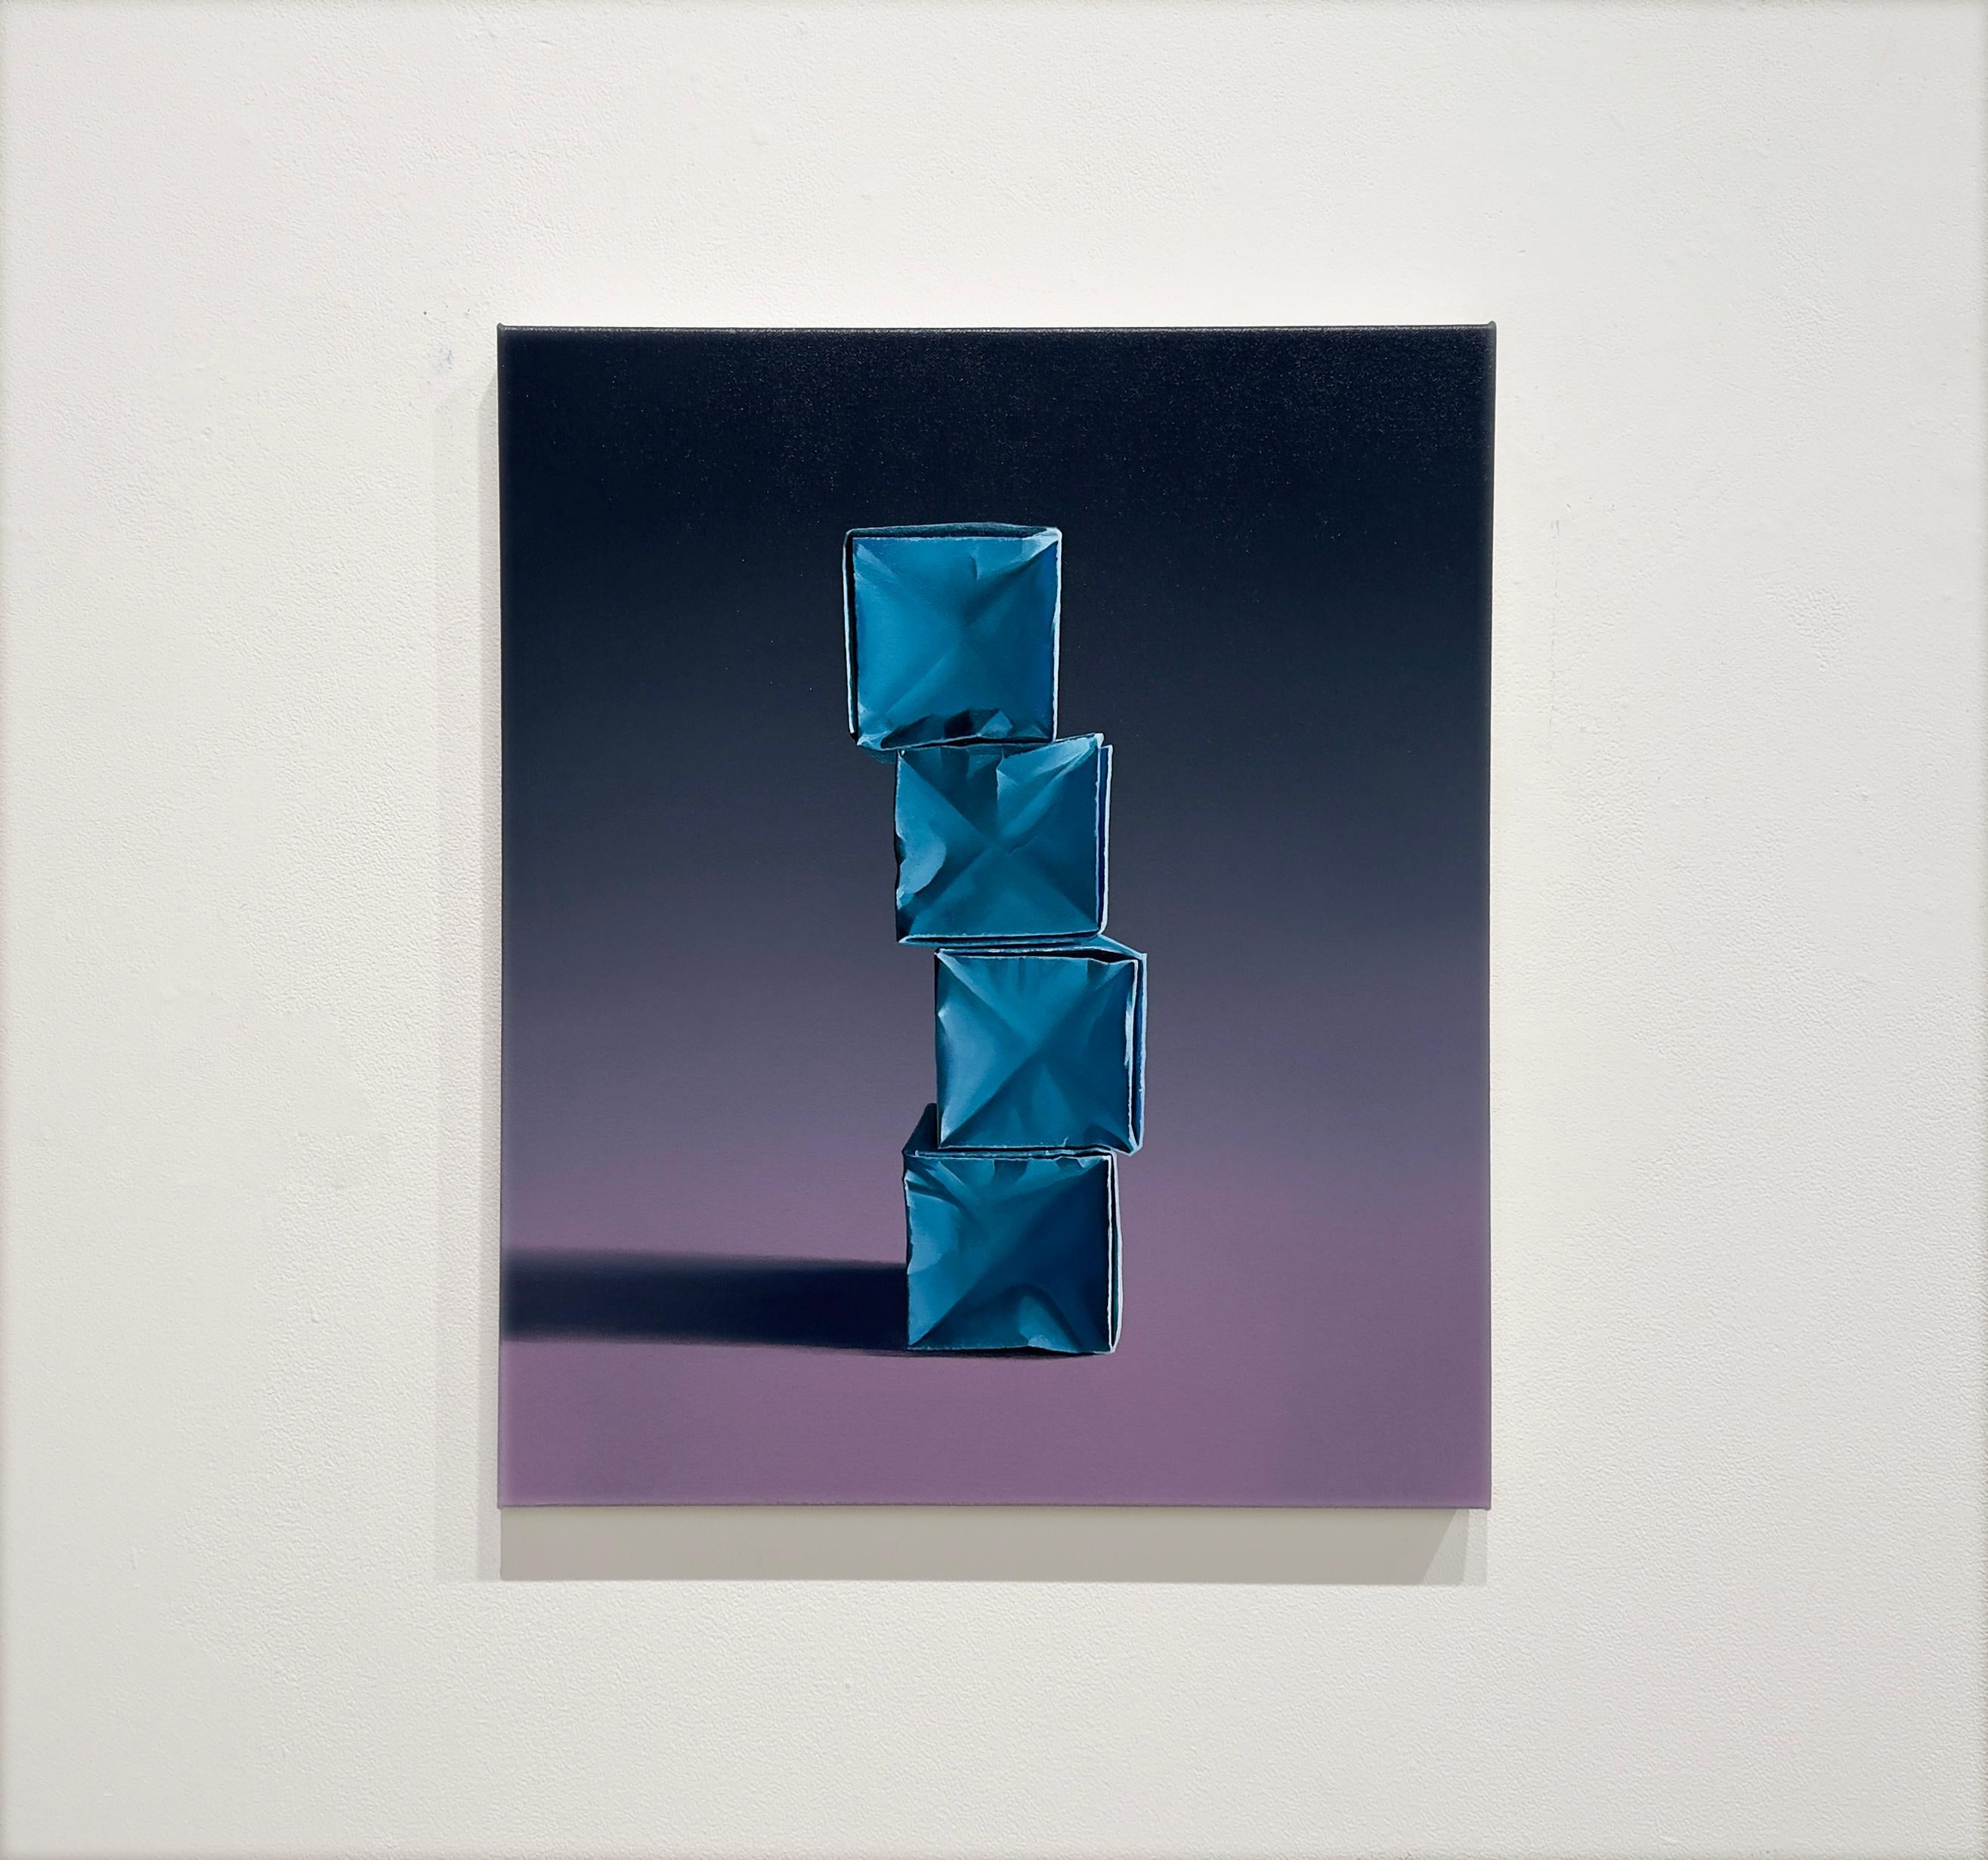 PAPER-Boxen: COMPOSITION MIT TEAL STACK ON  Purple/GRAY GRADIENT – Painting von Kevin Palme 